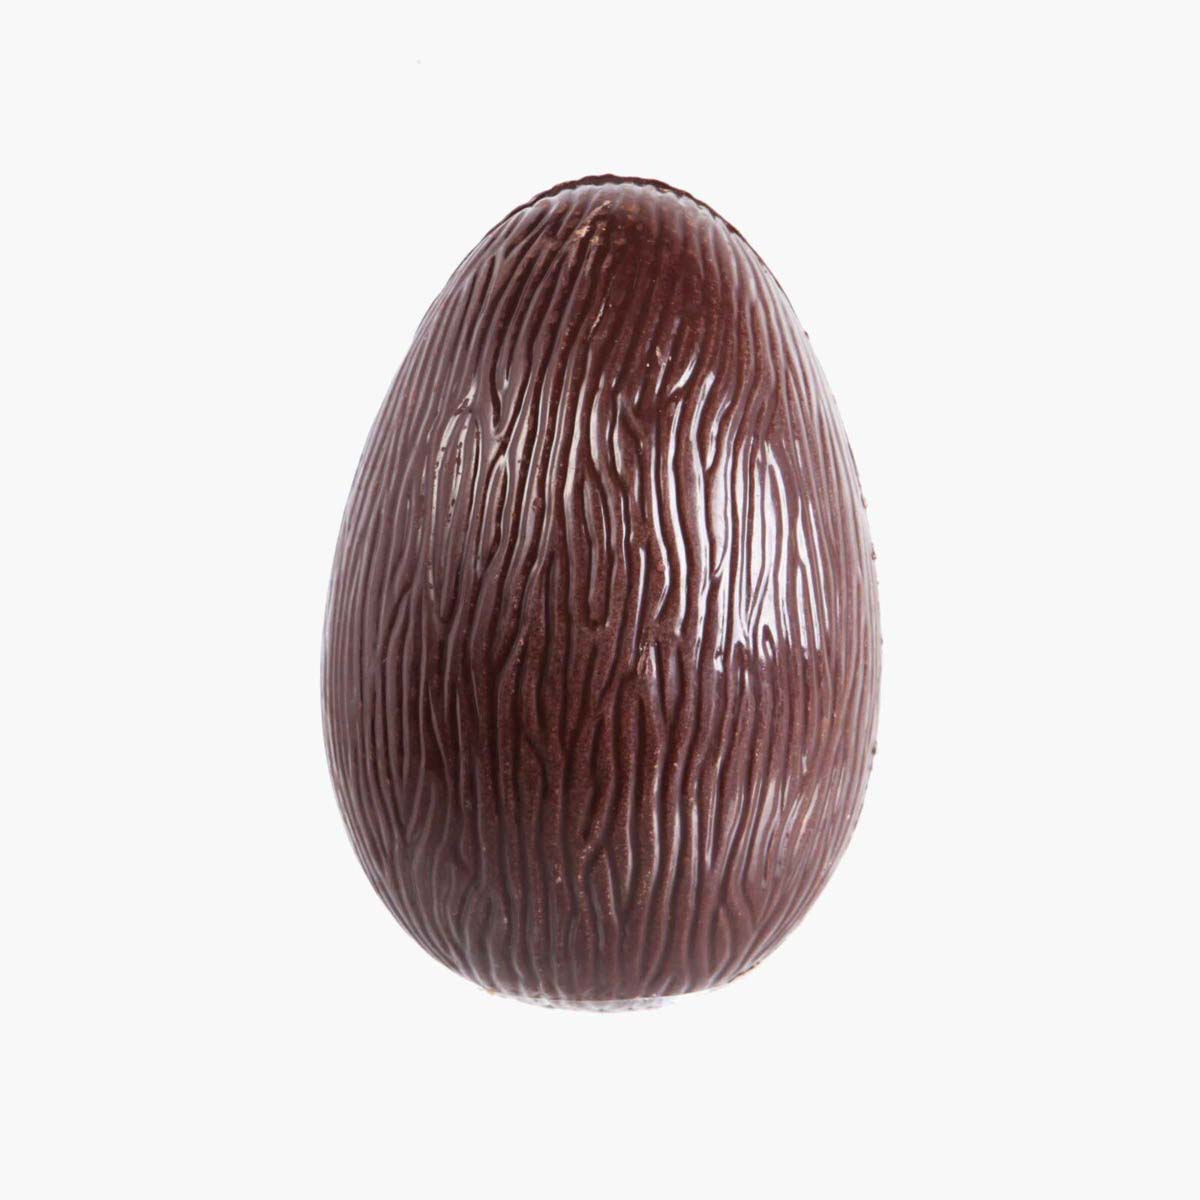 Huevo de chocolate negro rallado